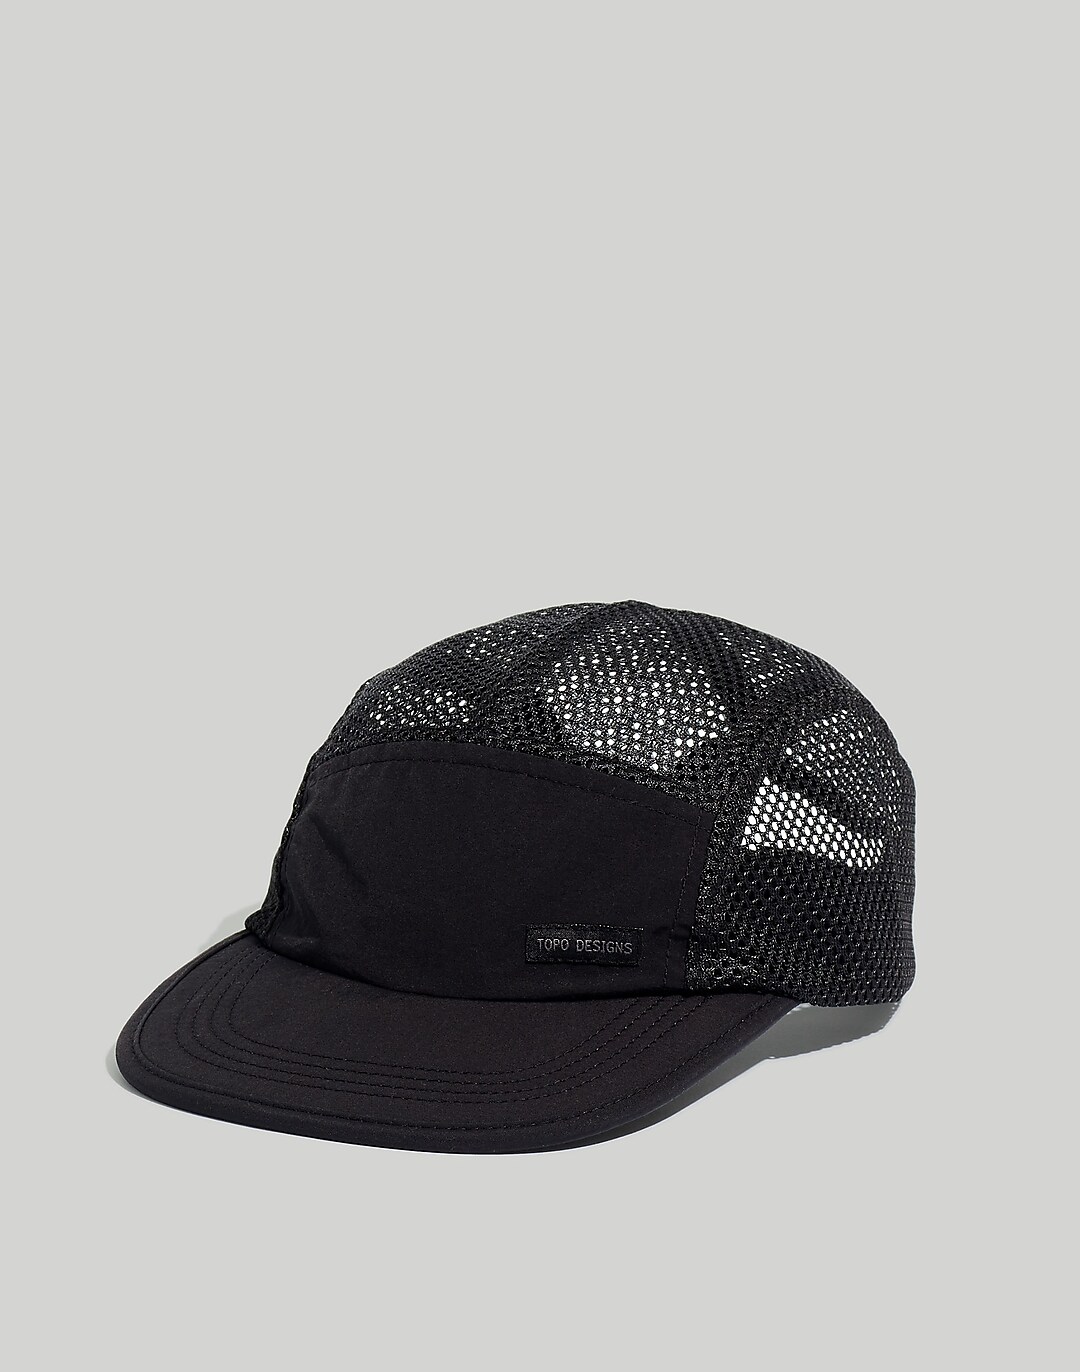 Topo Designs Outdoor Hats for Men